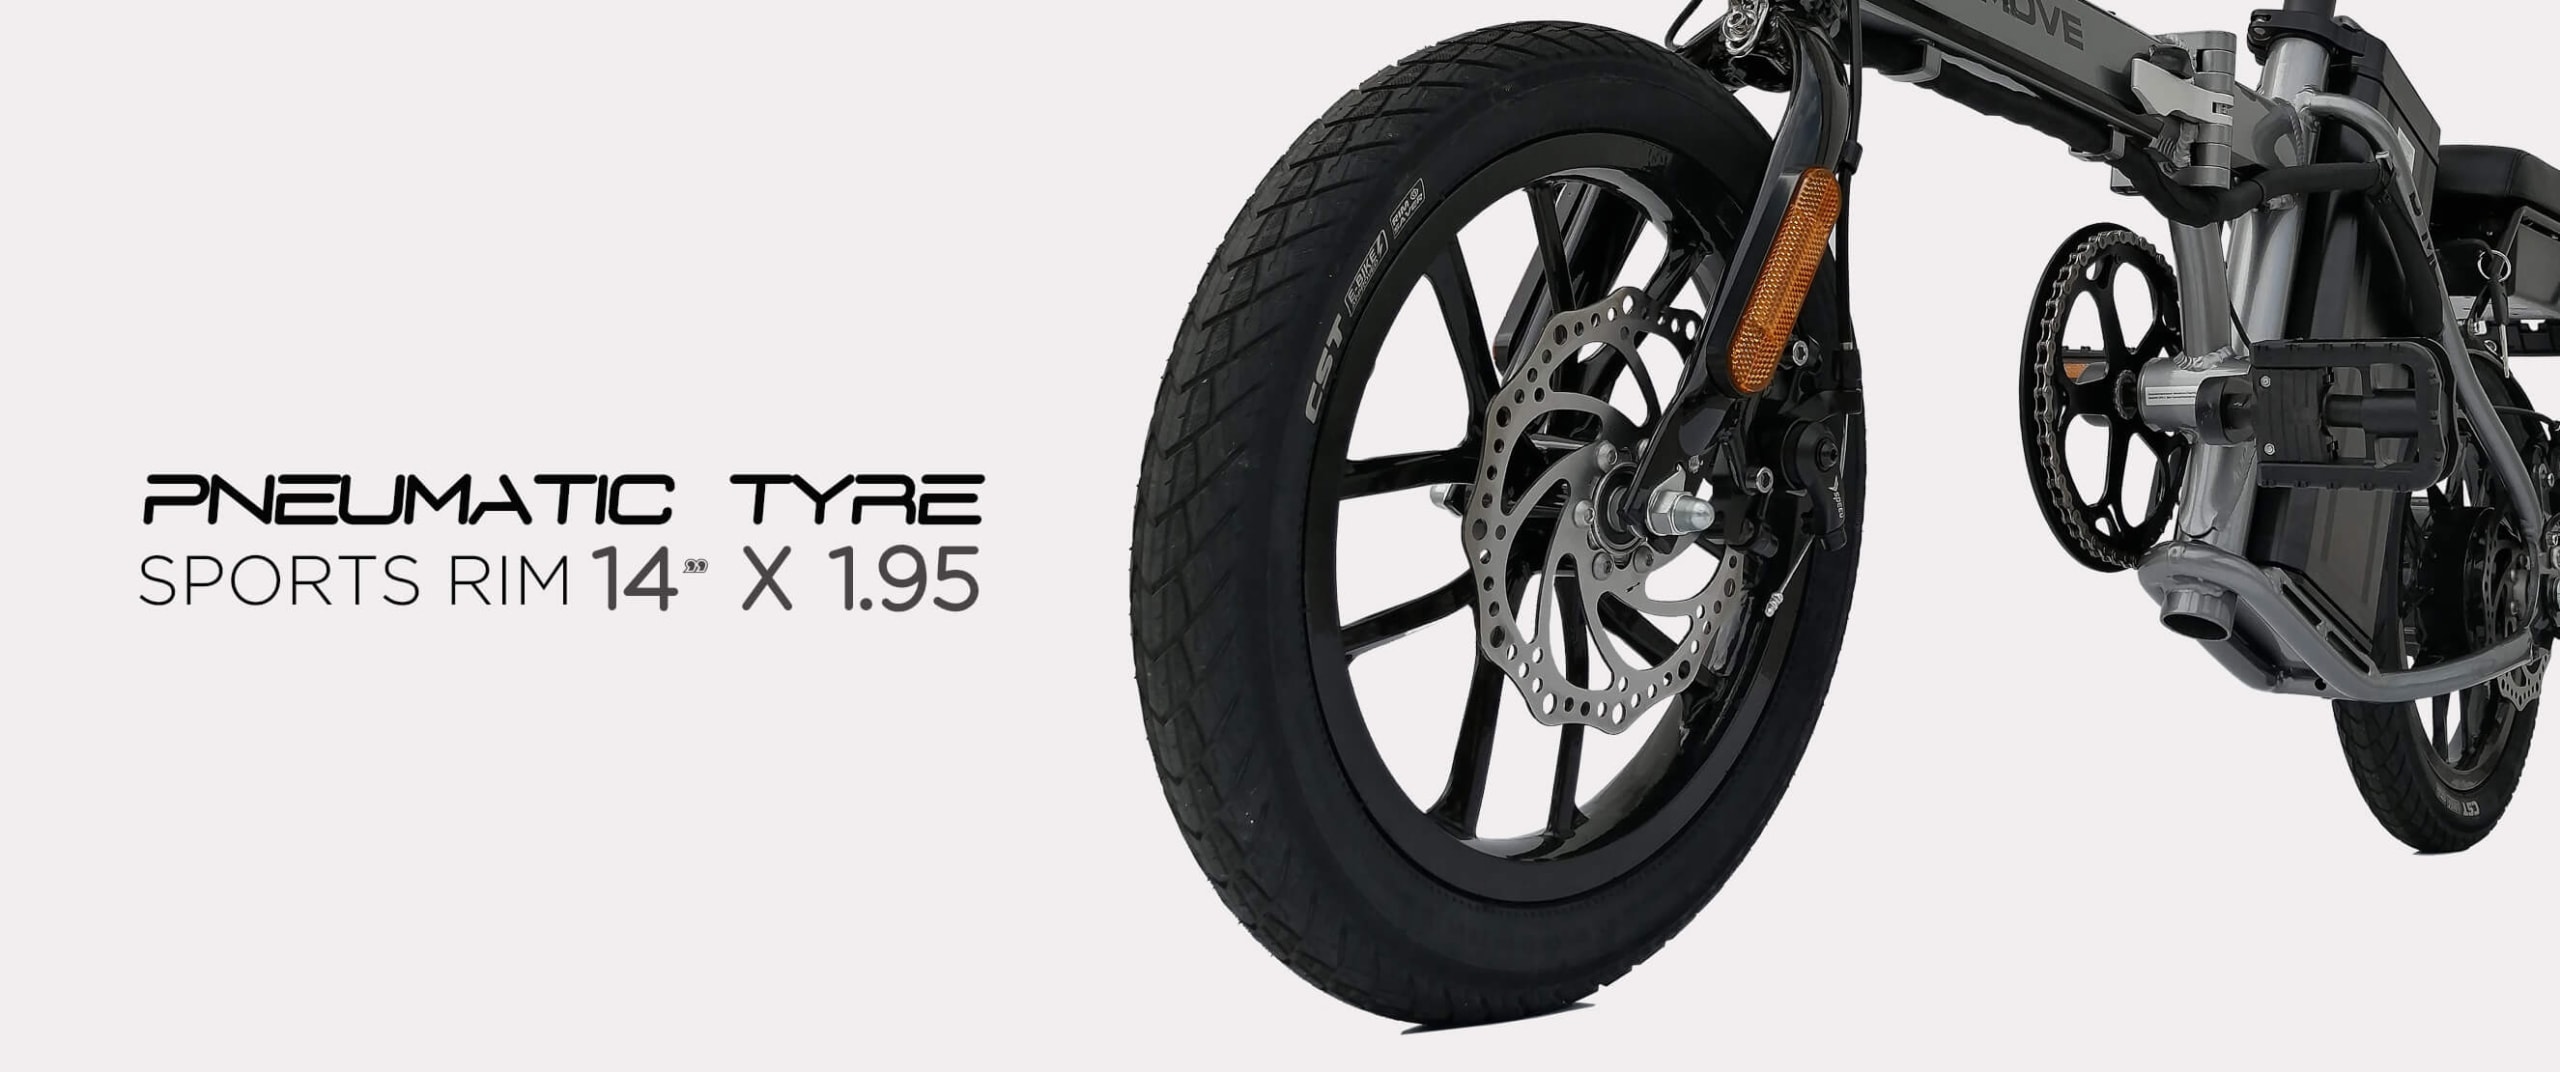 JI-MOVE MC LTA approved ebike pneumatic tyres sports rim